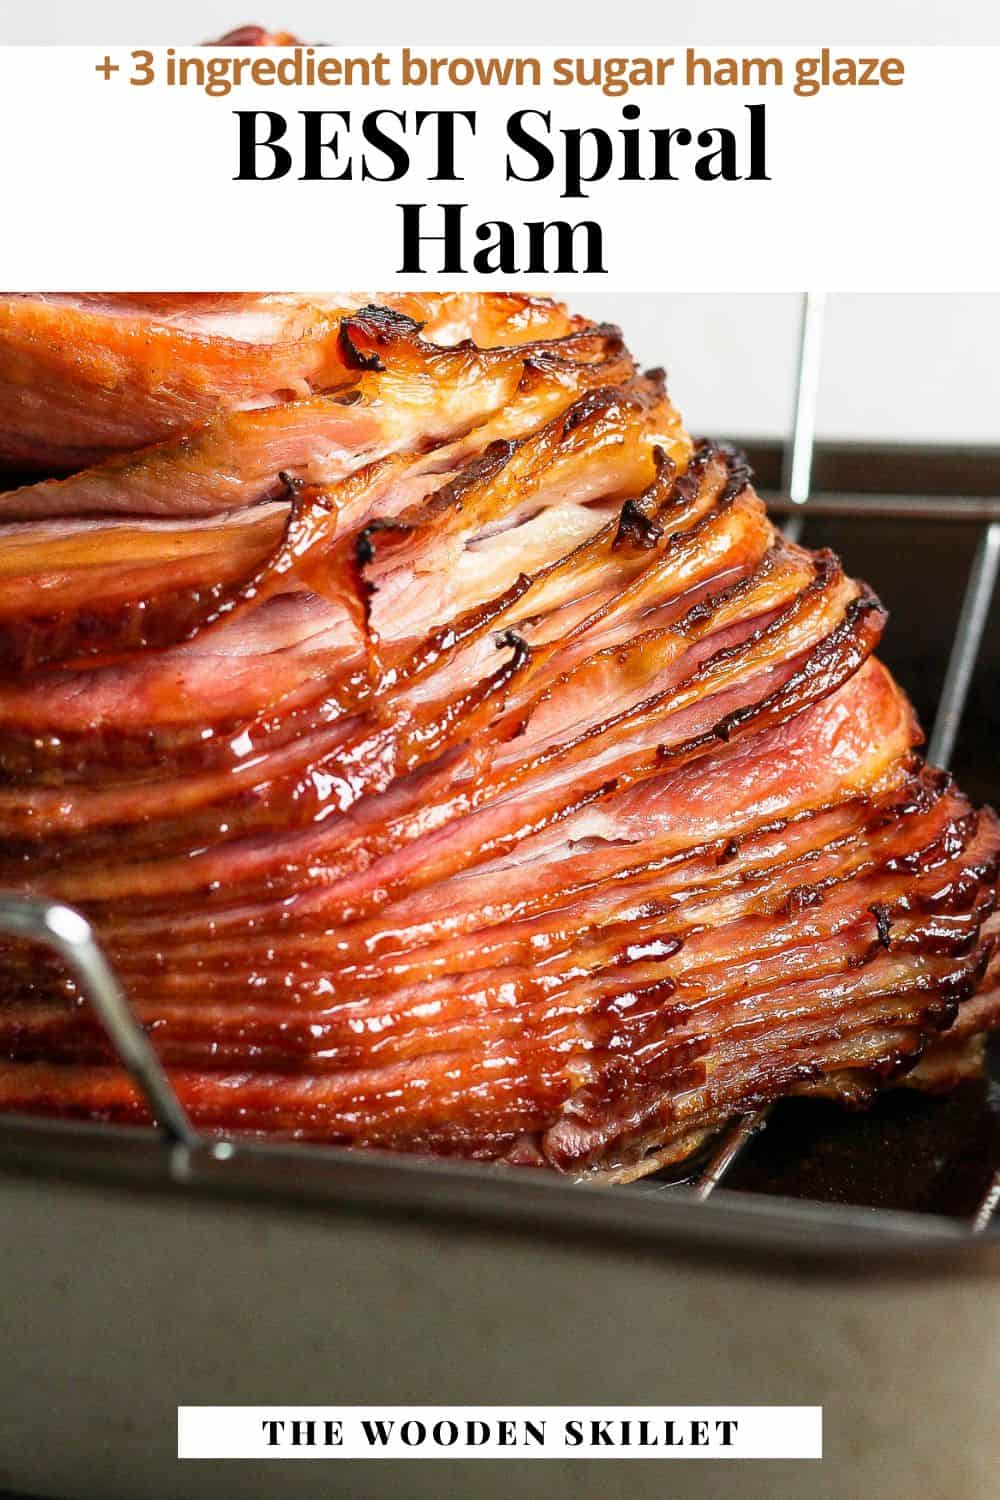 Pinterest image showing a cooked spiral ham with the title "best spiral ham and three ingredient brown sugar ham glaze.